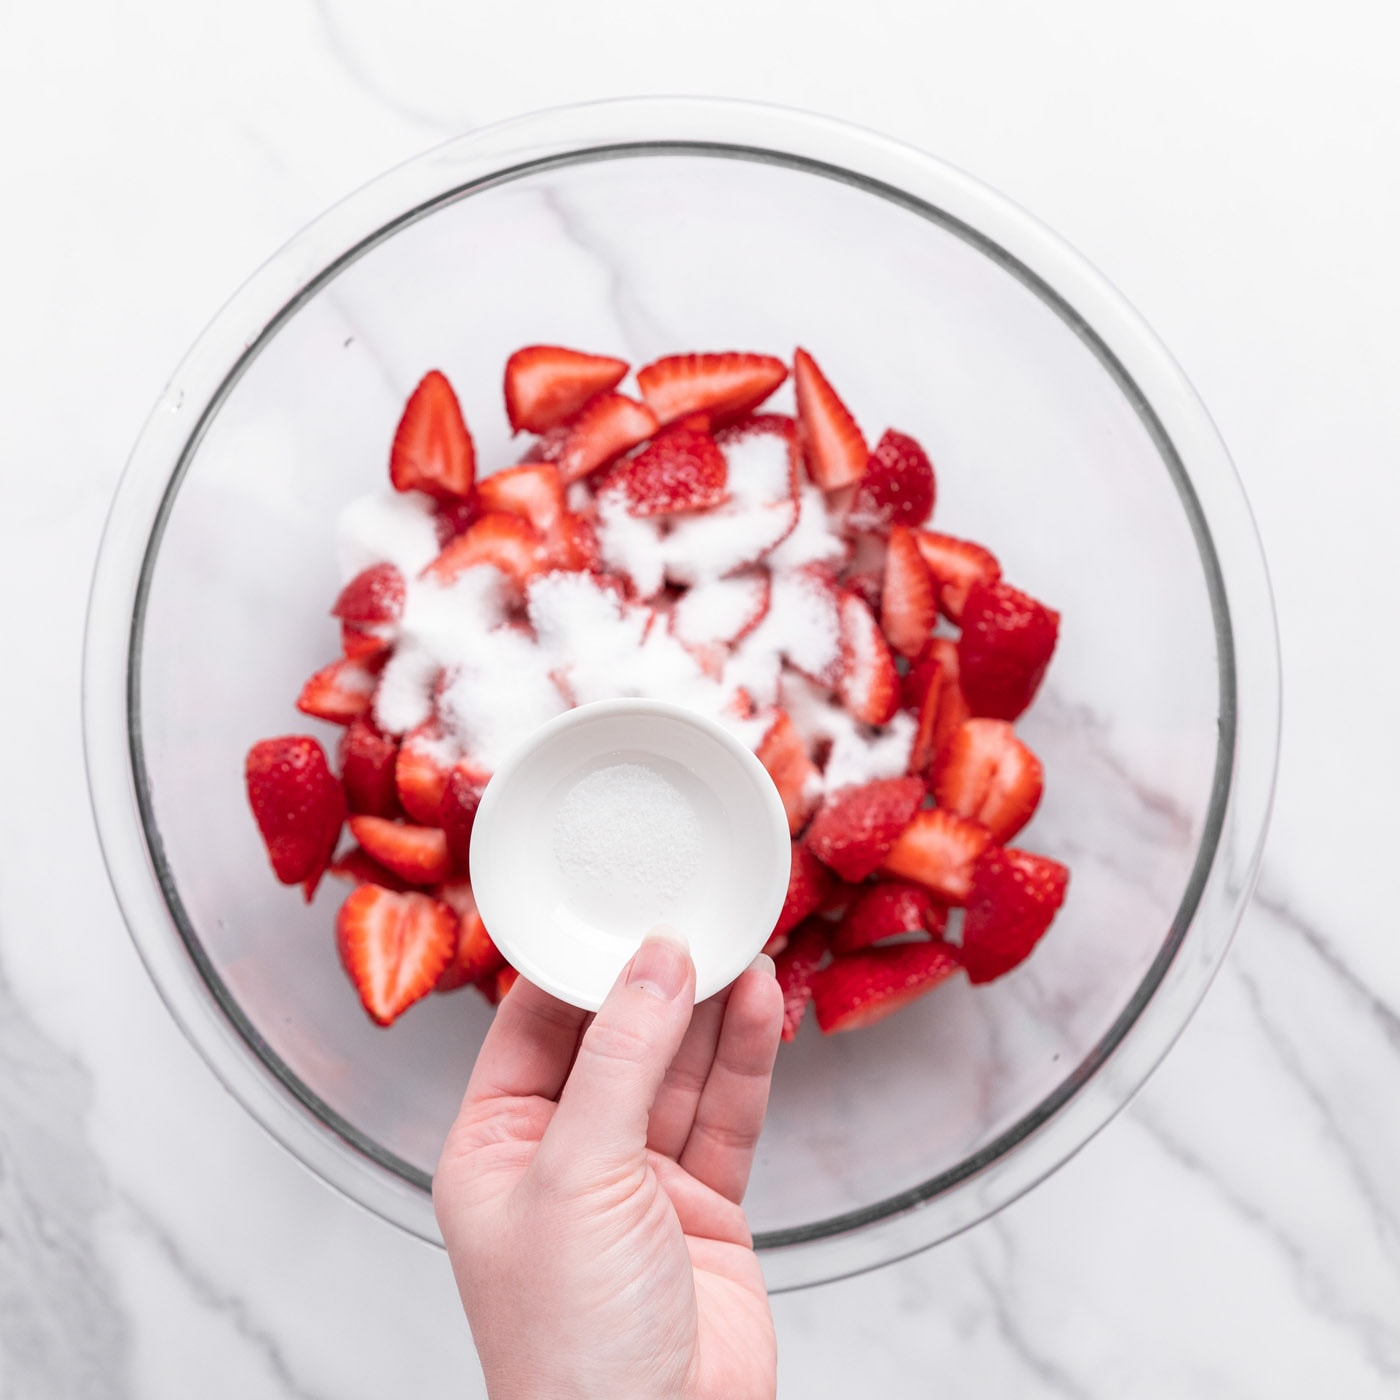 sprinkled sugar on top of chopped strawberries